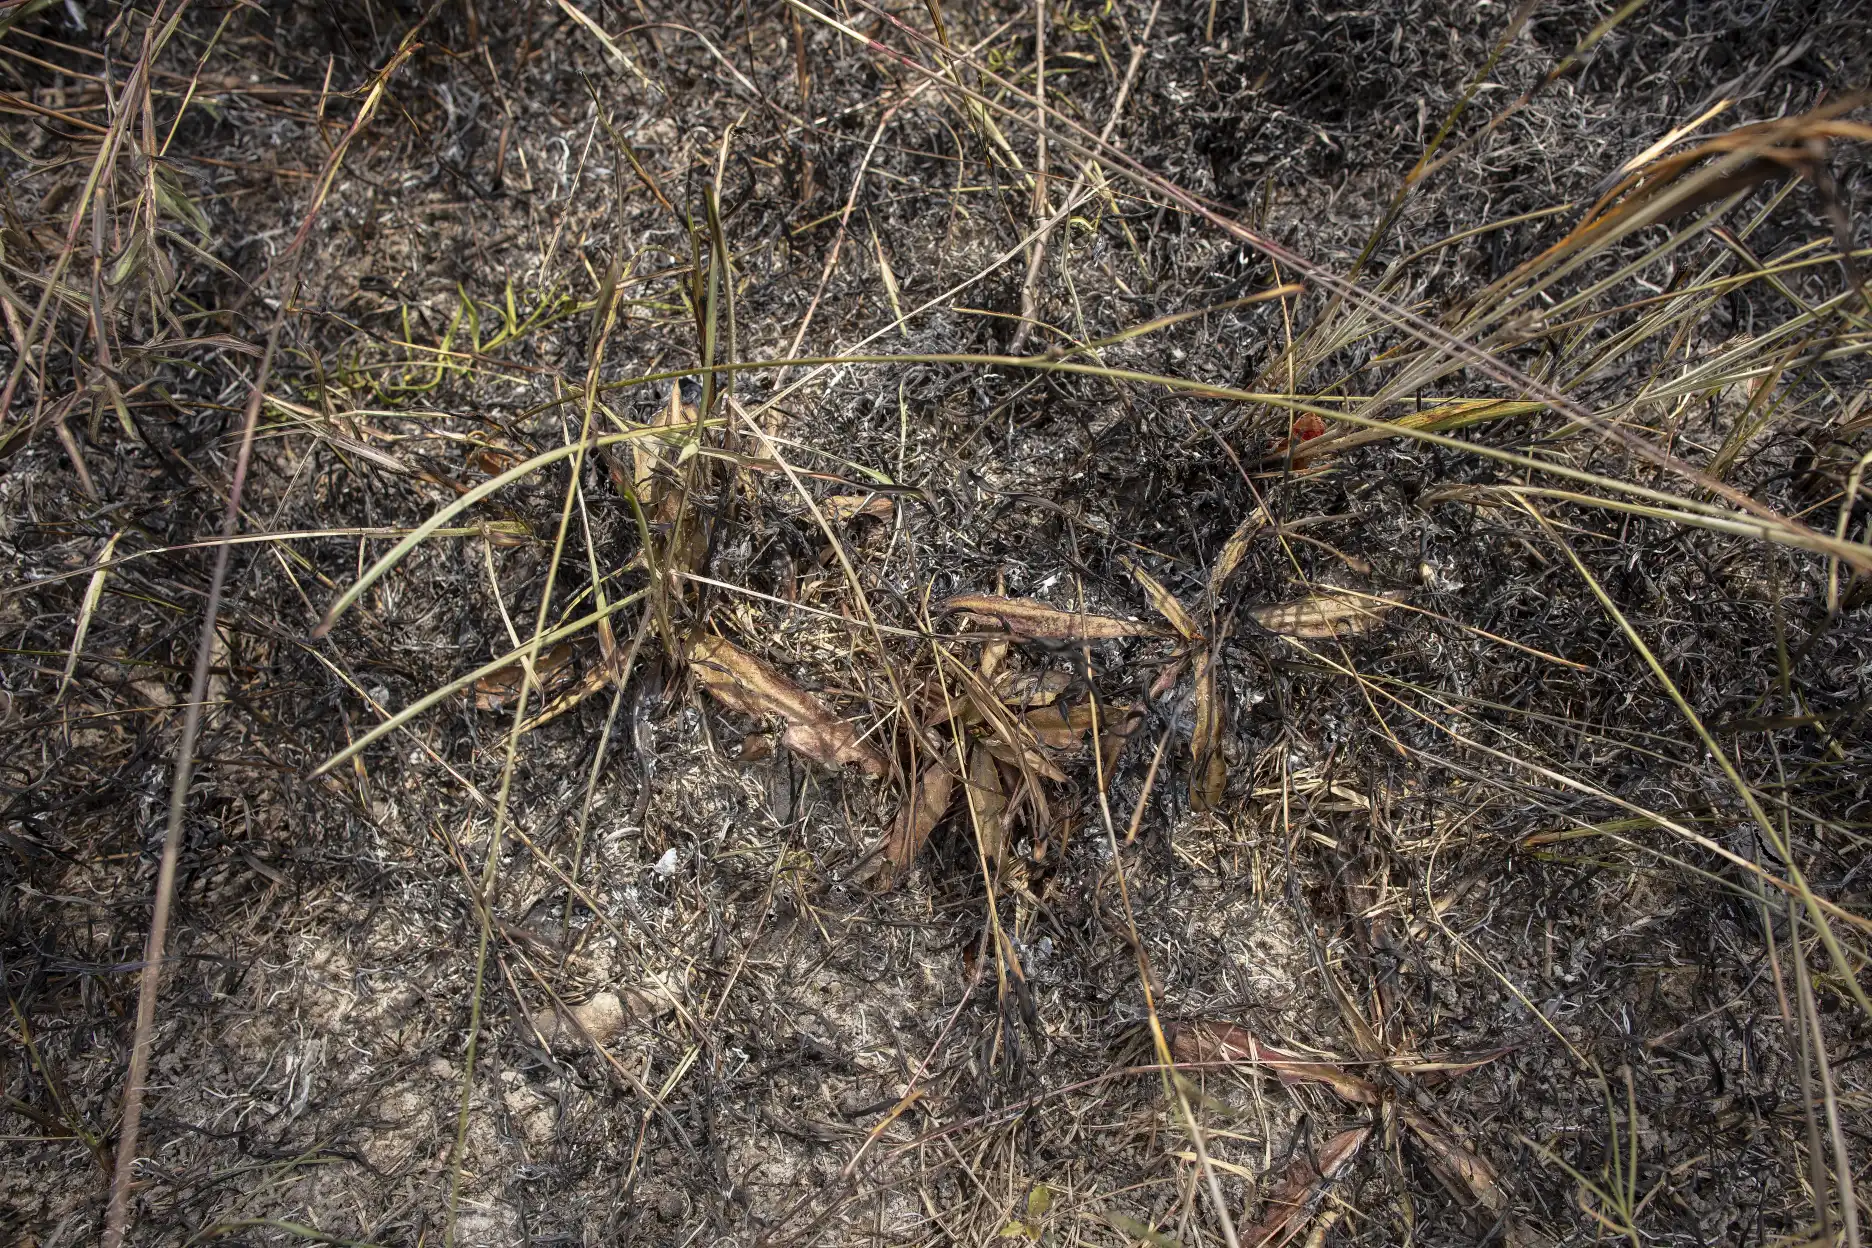 Burnt Nepenthes smilesii plants